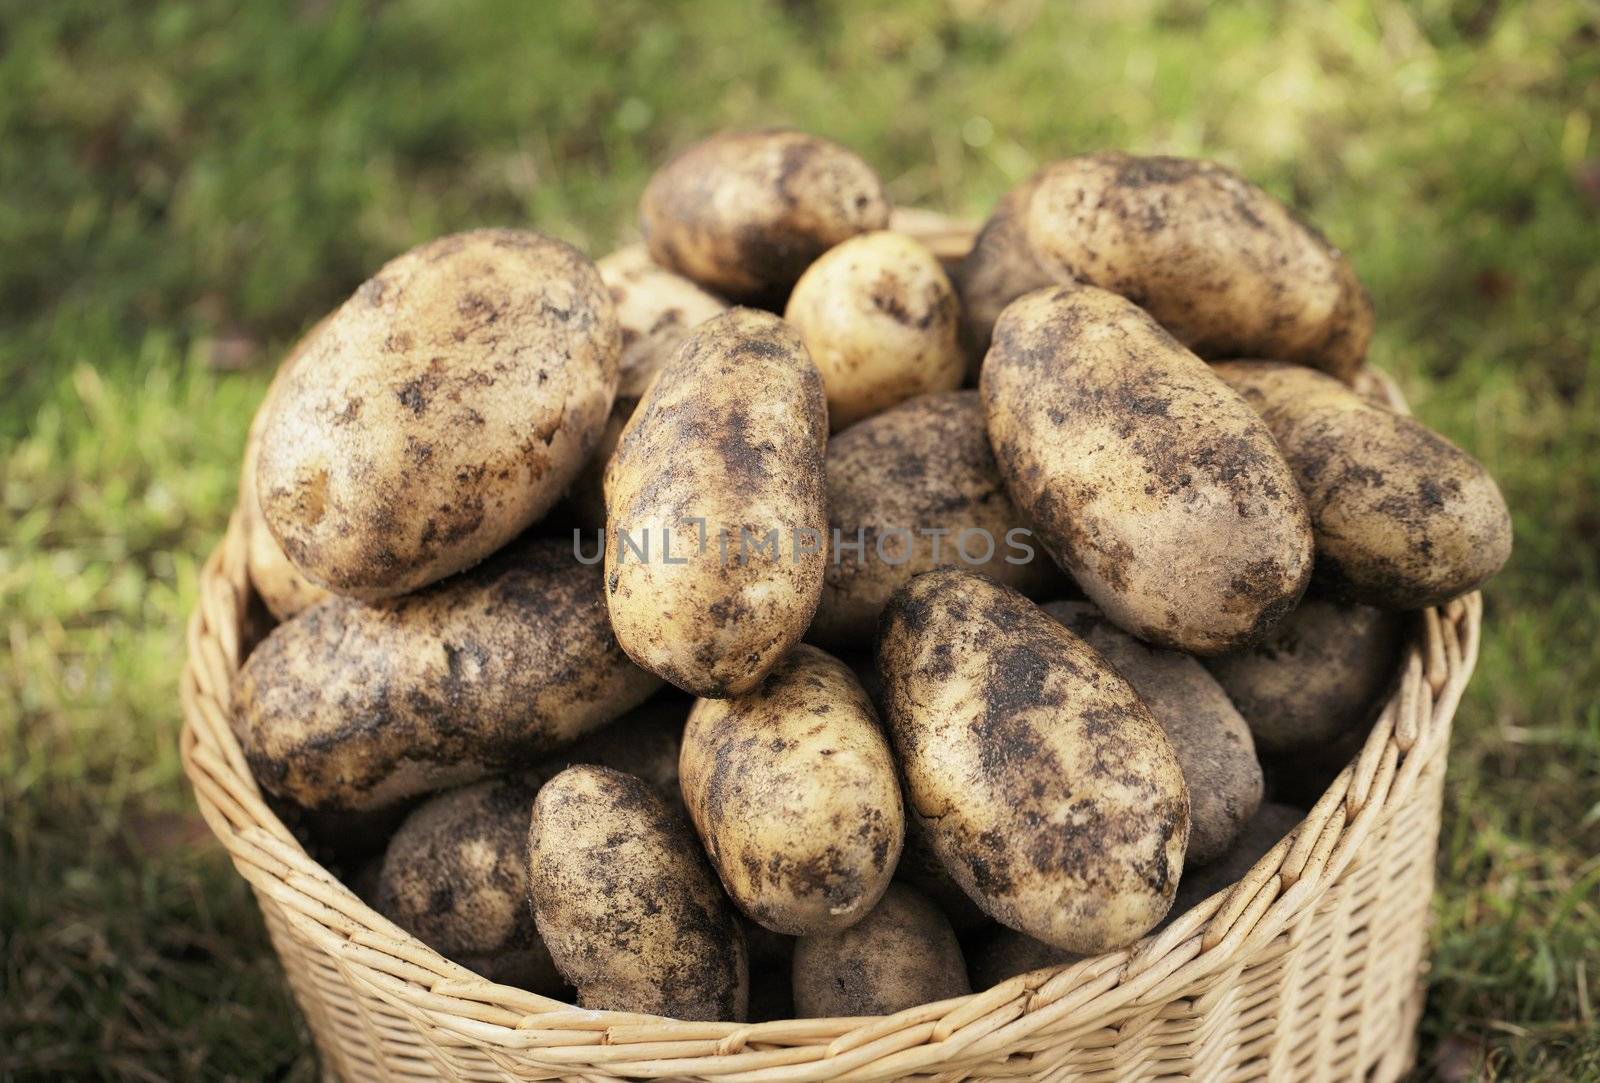 Potato harvest by Stocksnapper